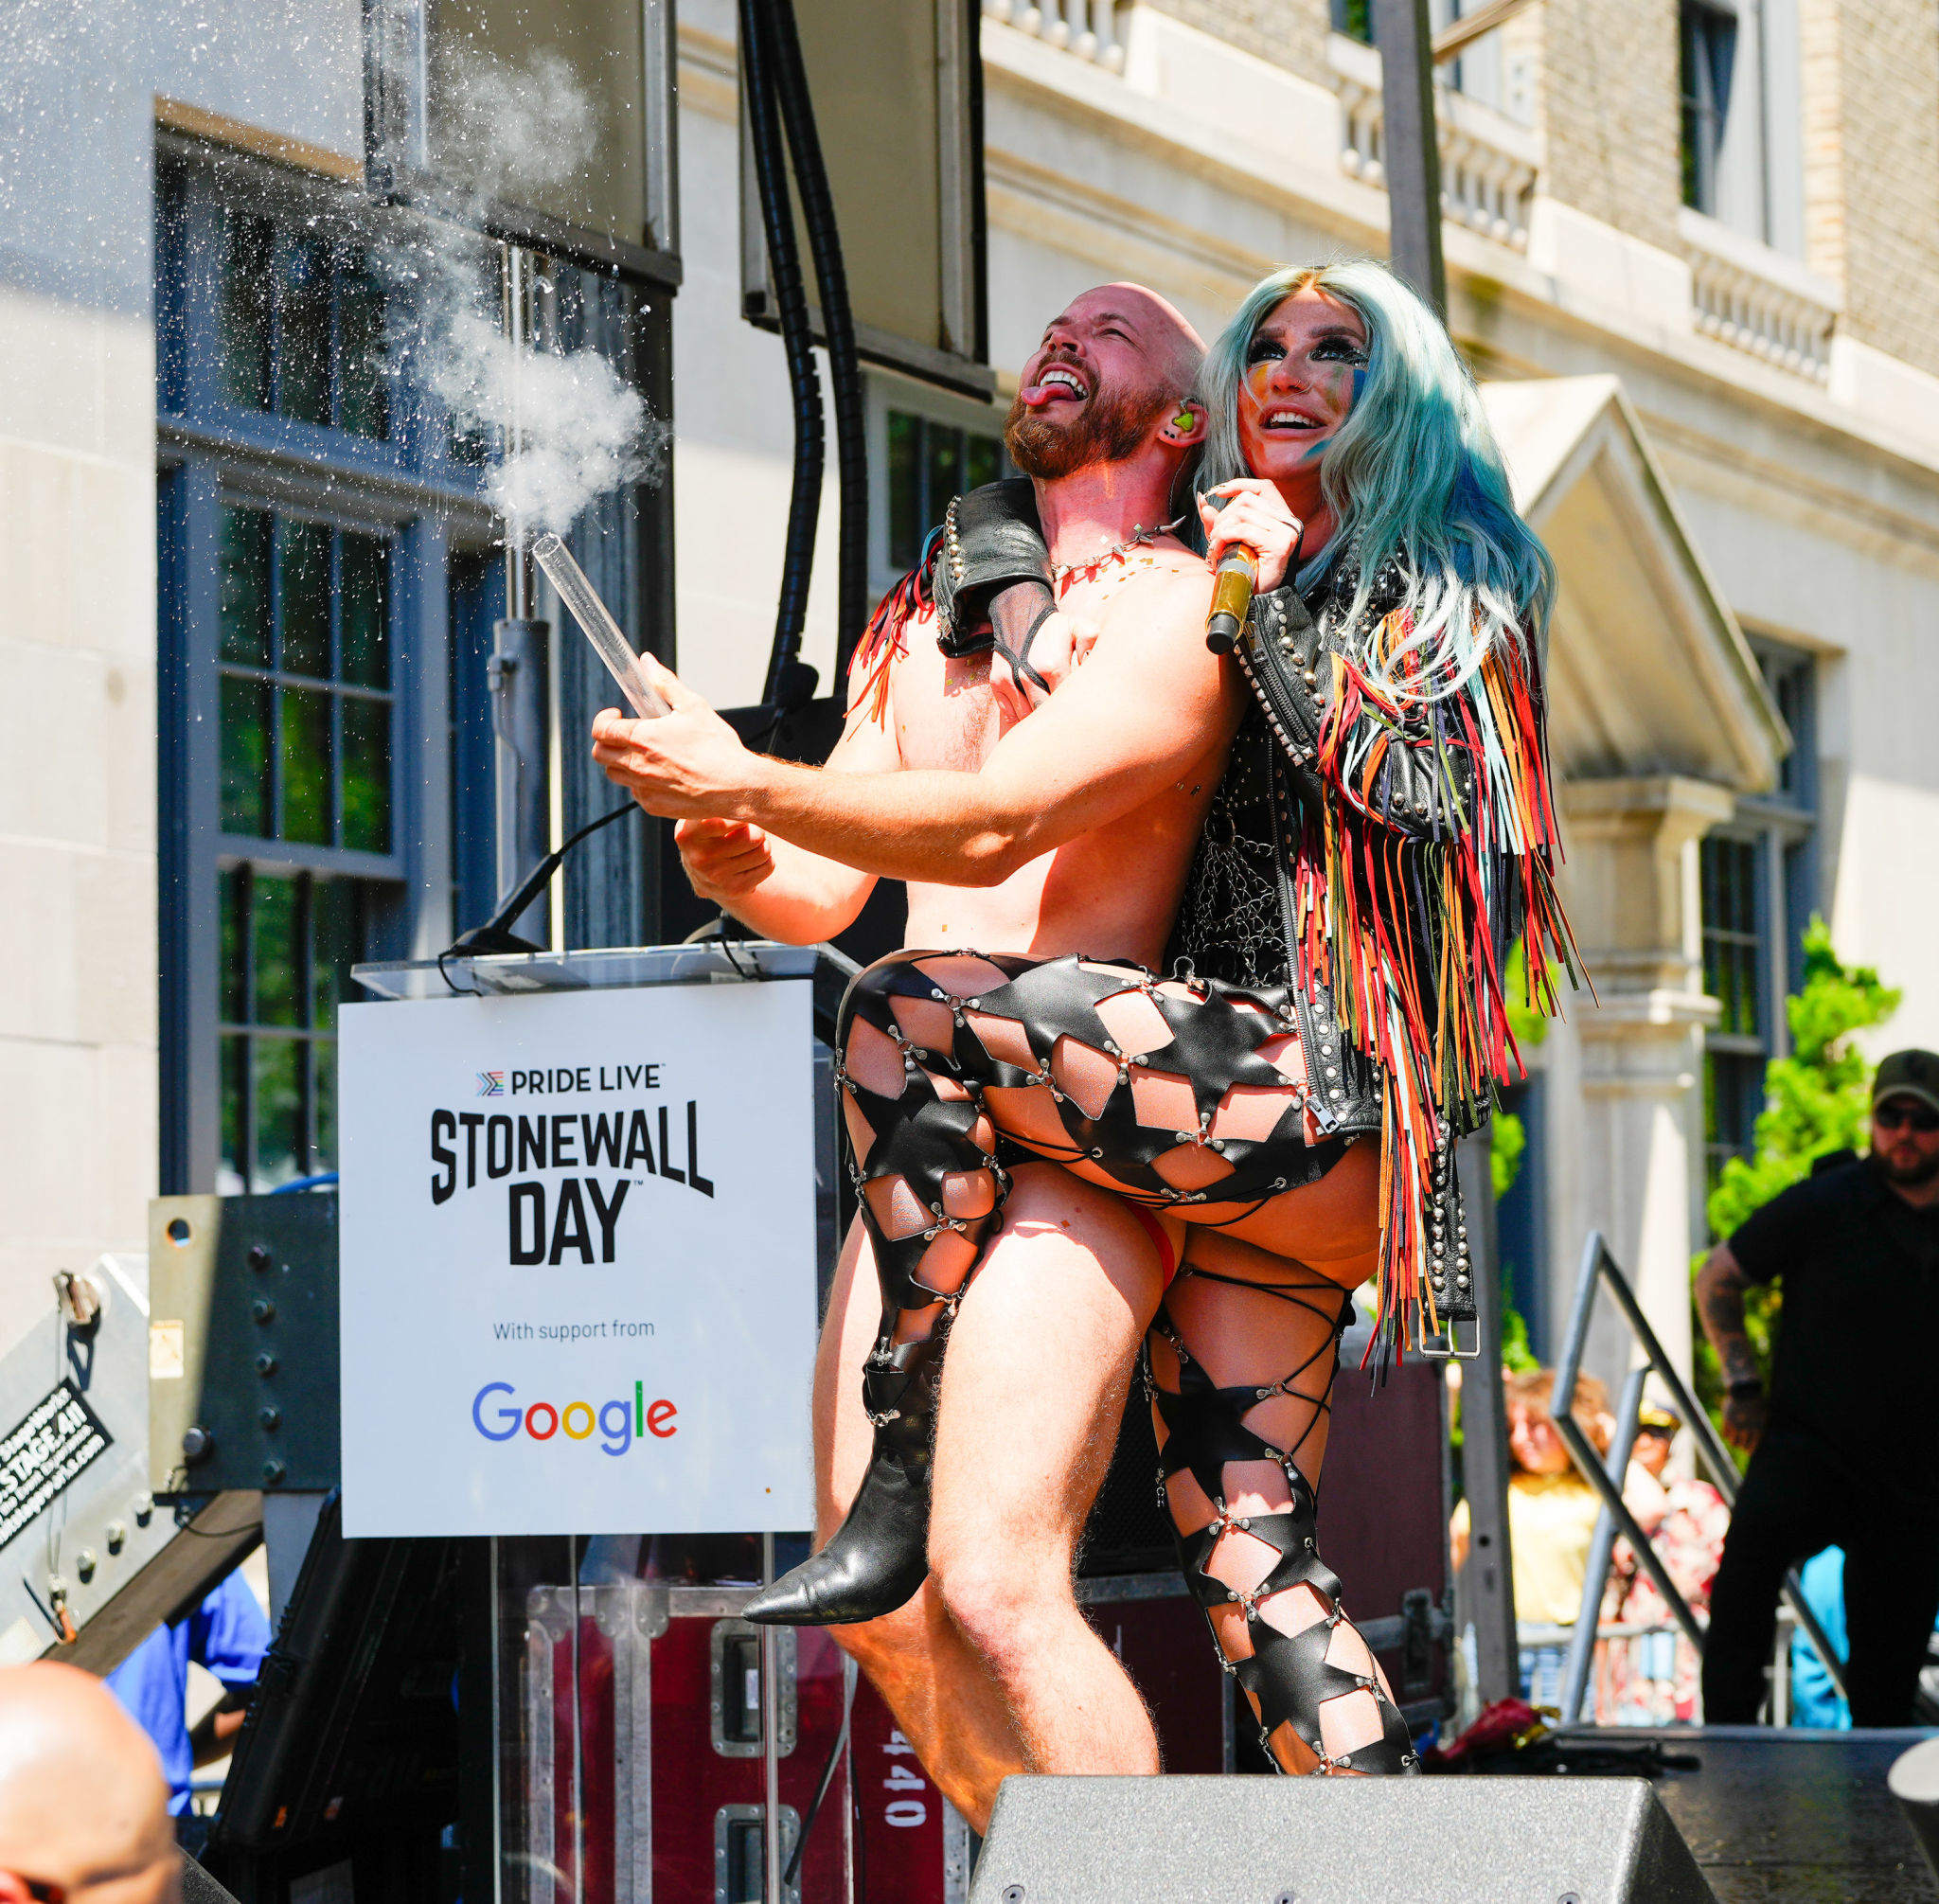 kesha-Pride-Live-Stonewall-Day-23.jpg